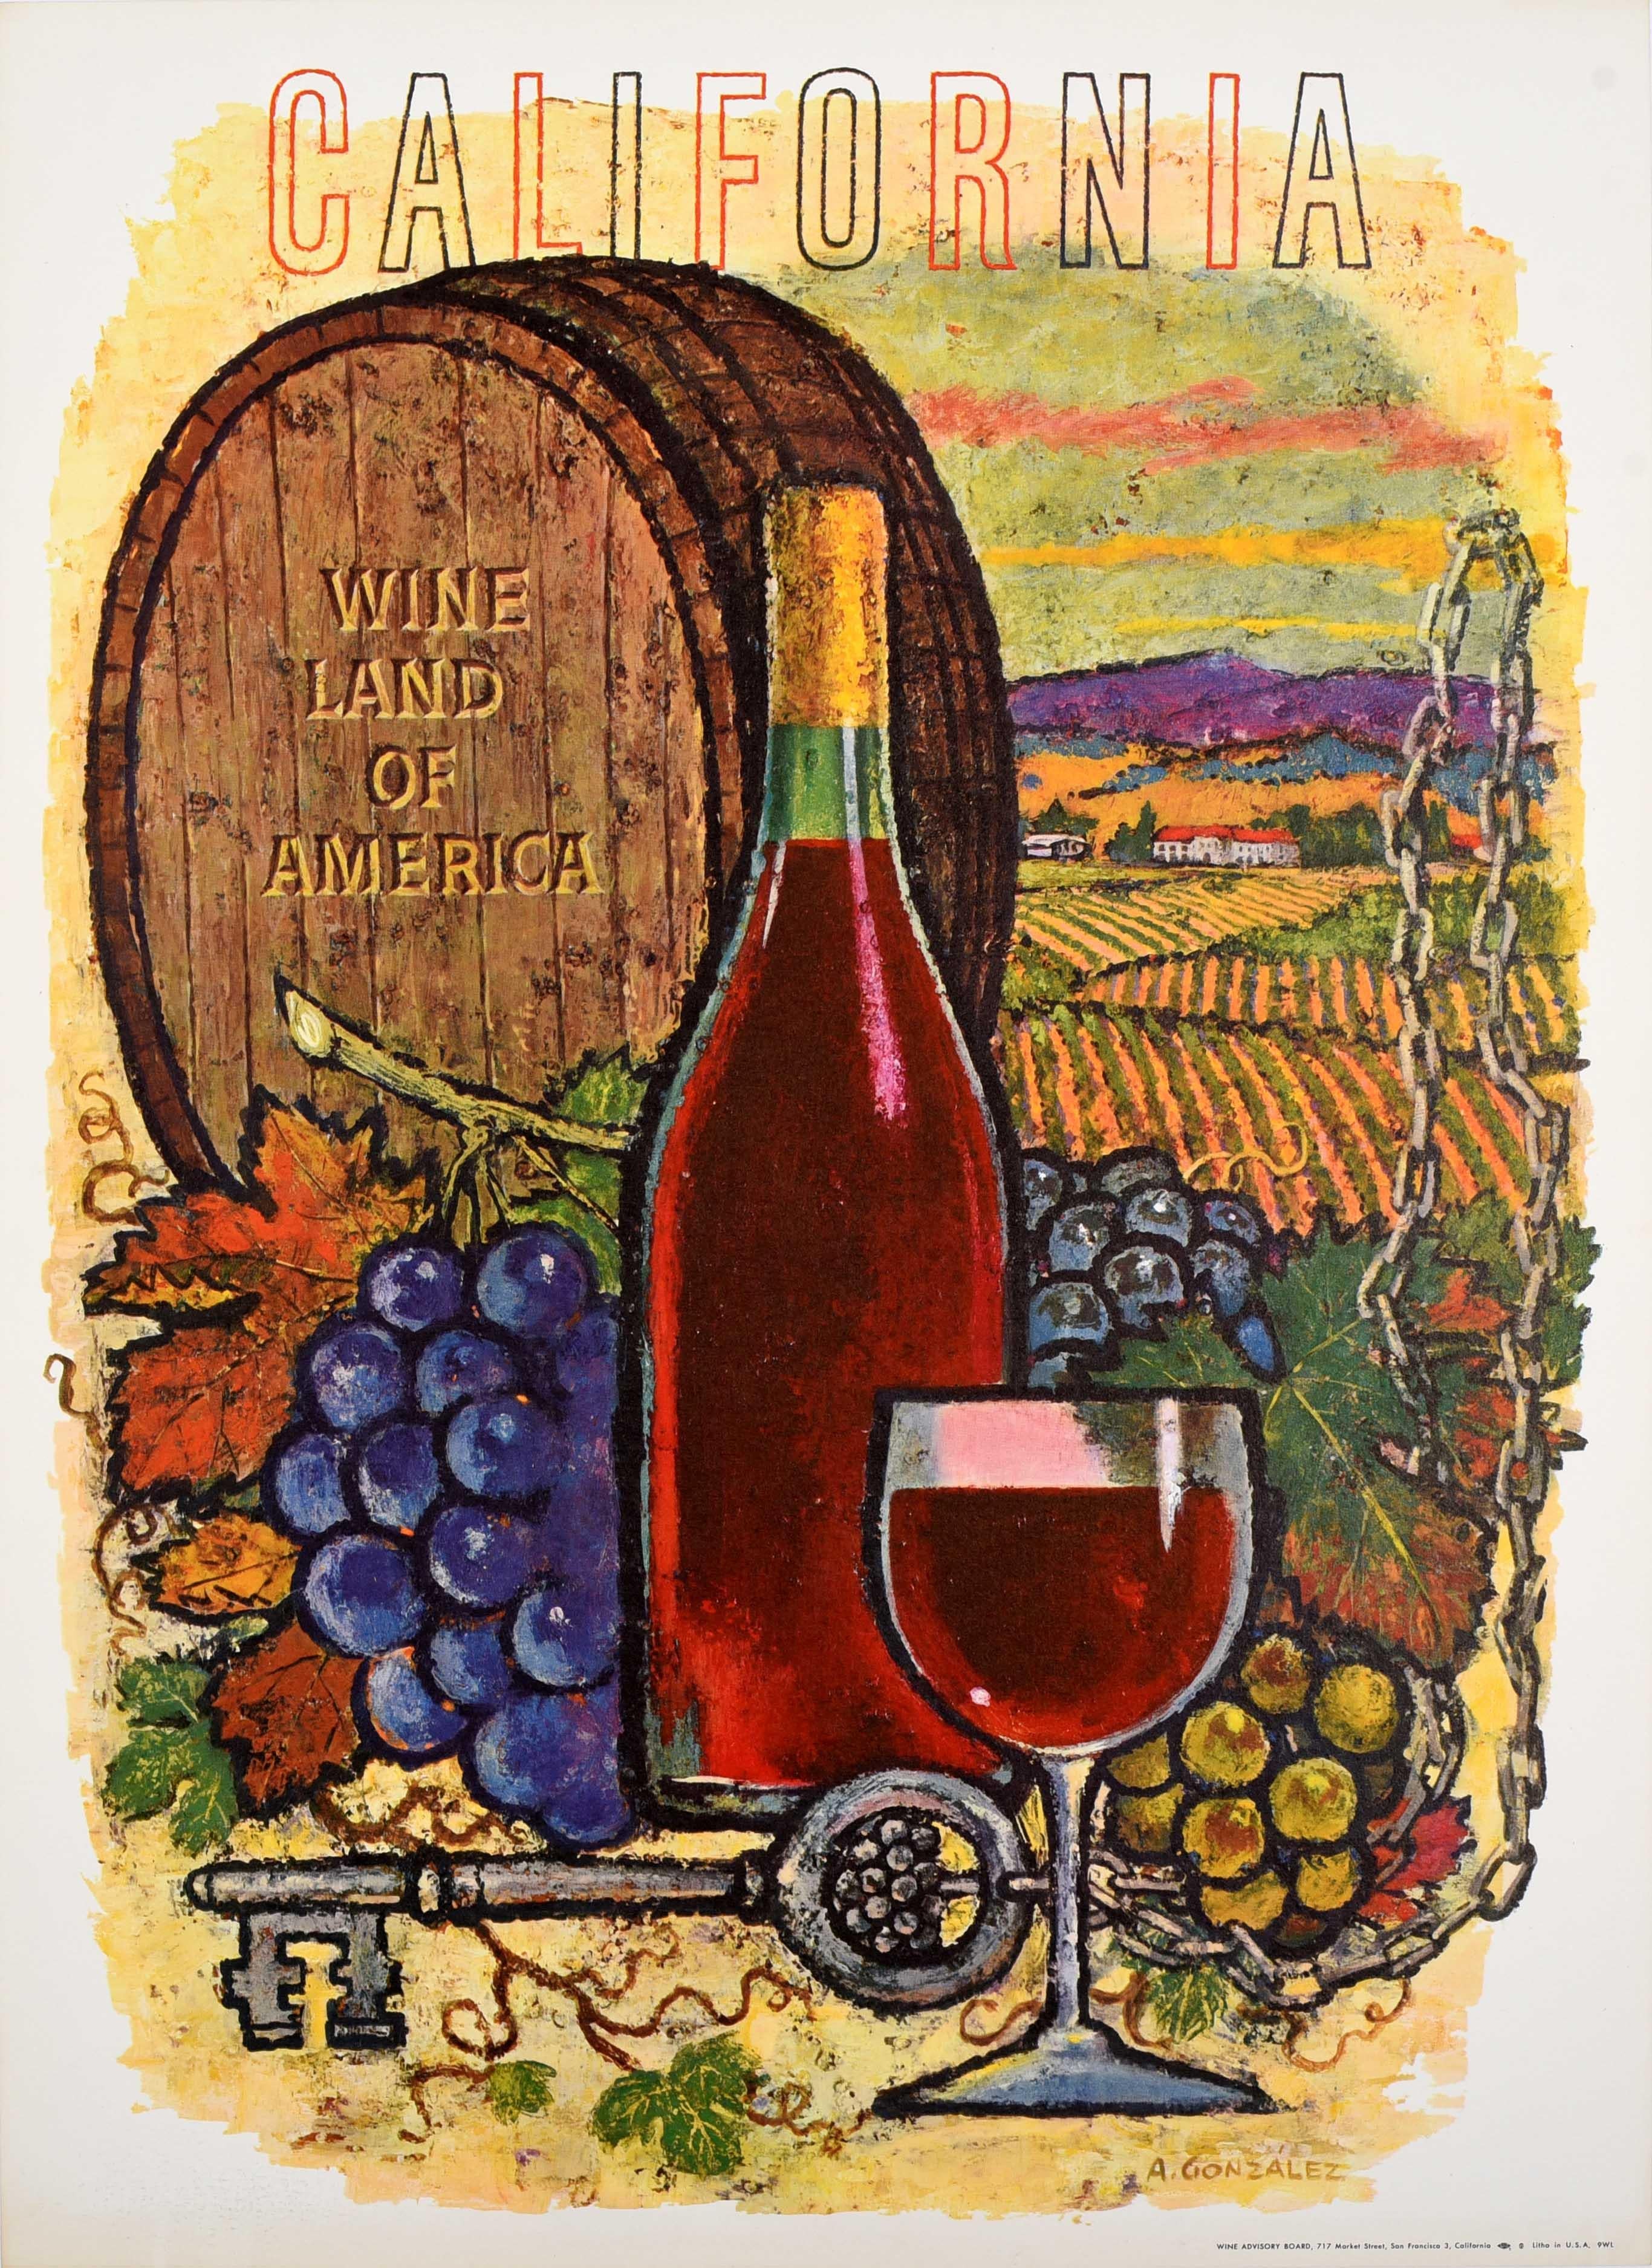 Unknown Print - Original Vintage Drink Advertising Travel Poster California Wine Land Of America